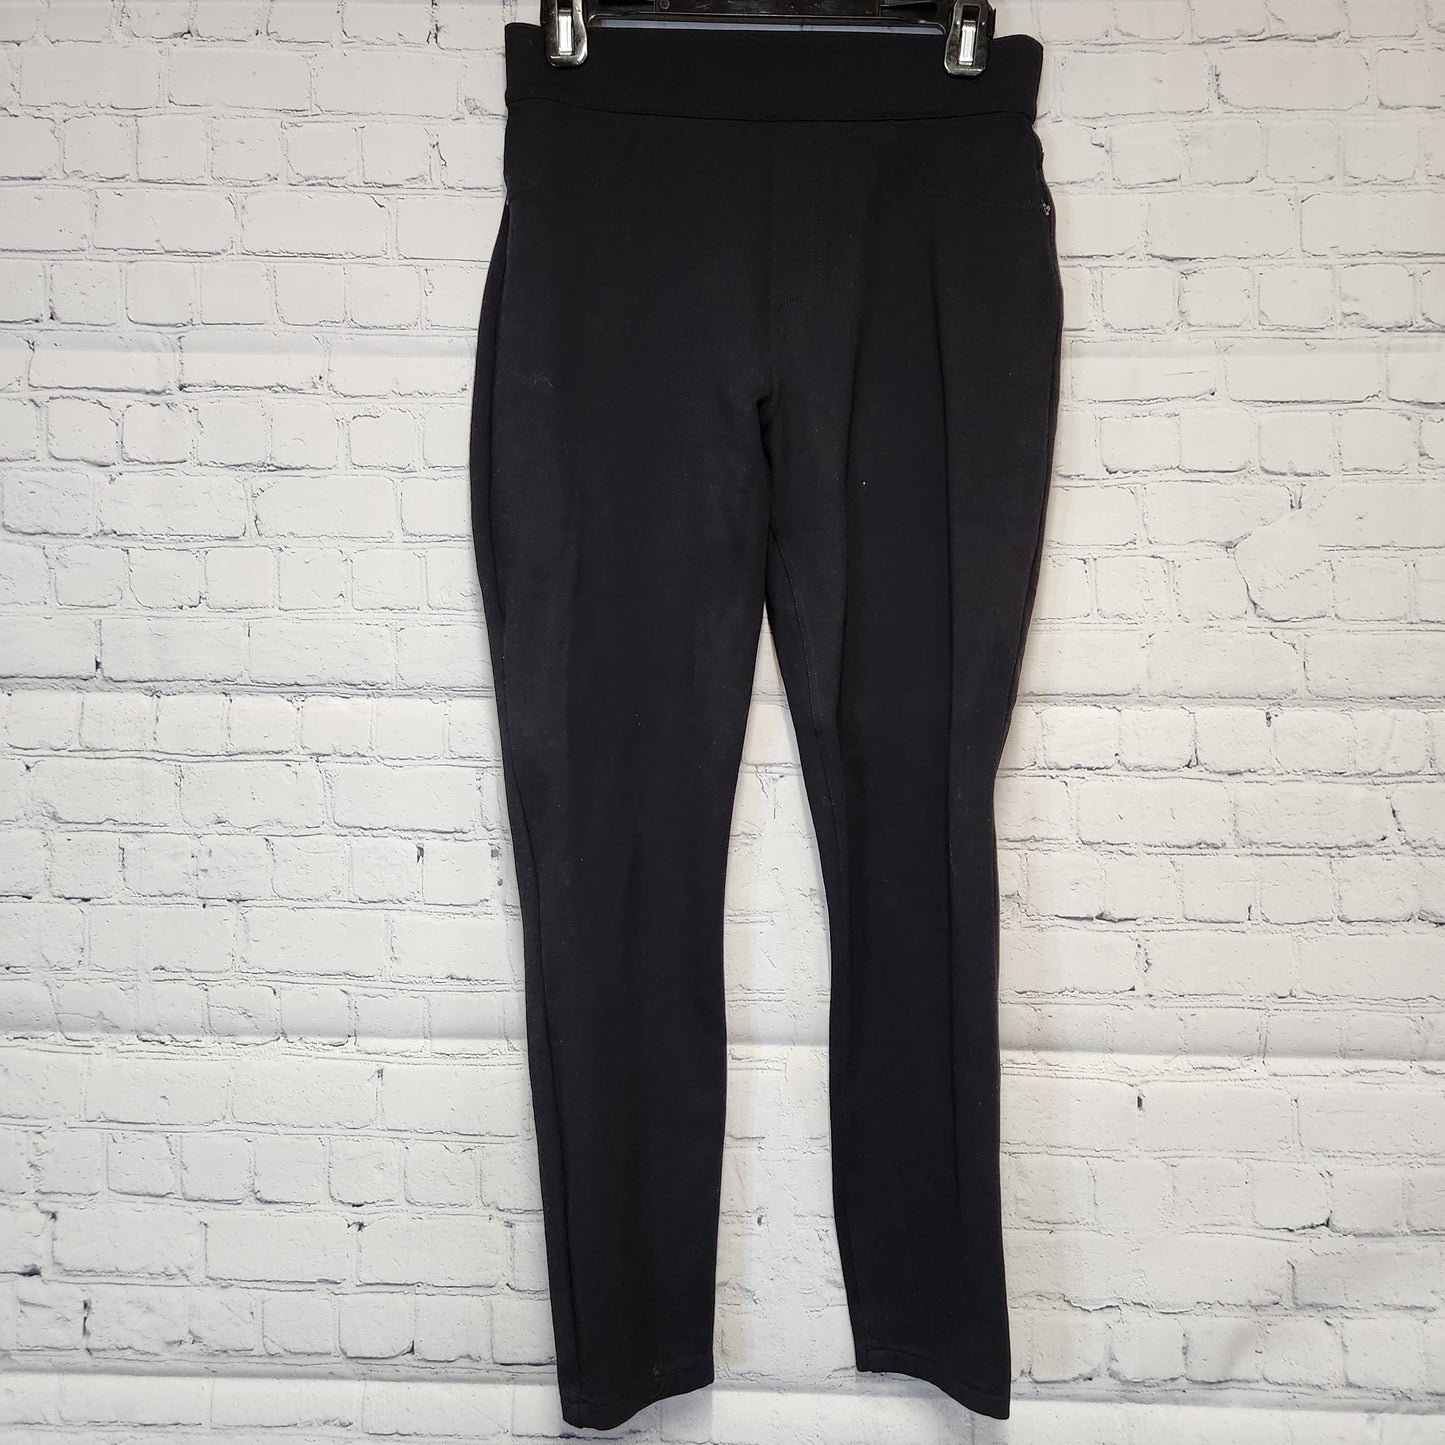 Spanx Women's Pants Black - Medium